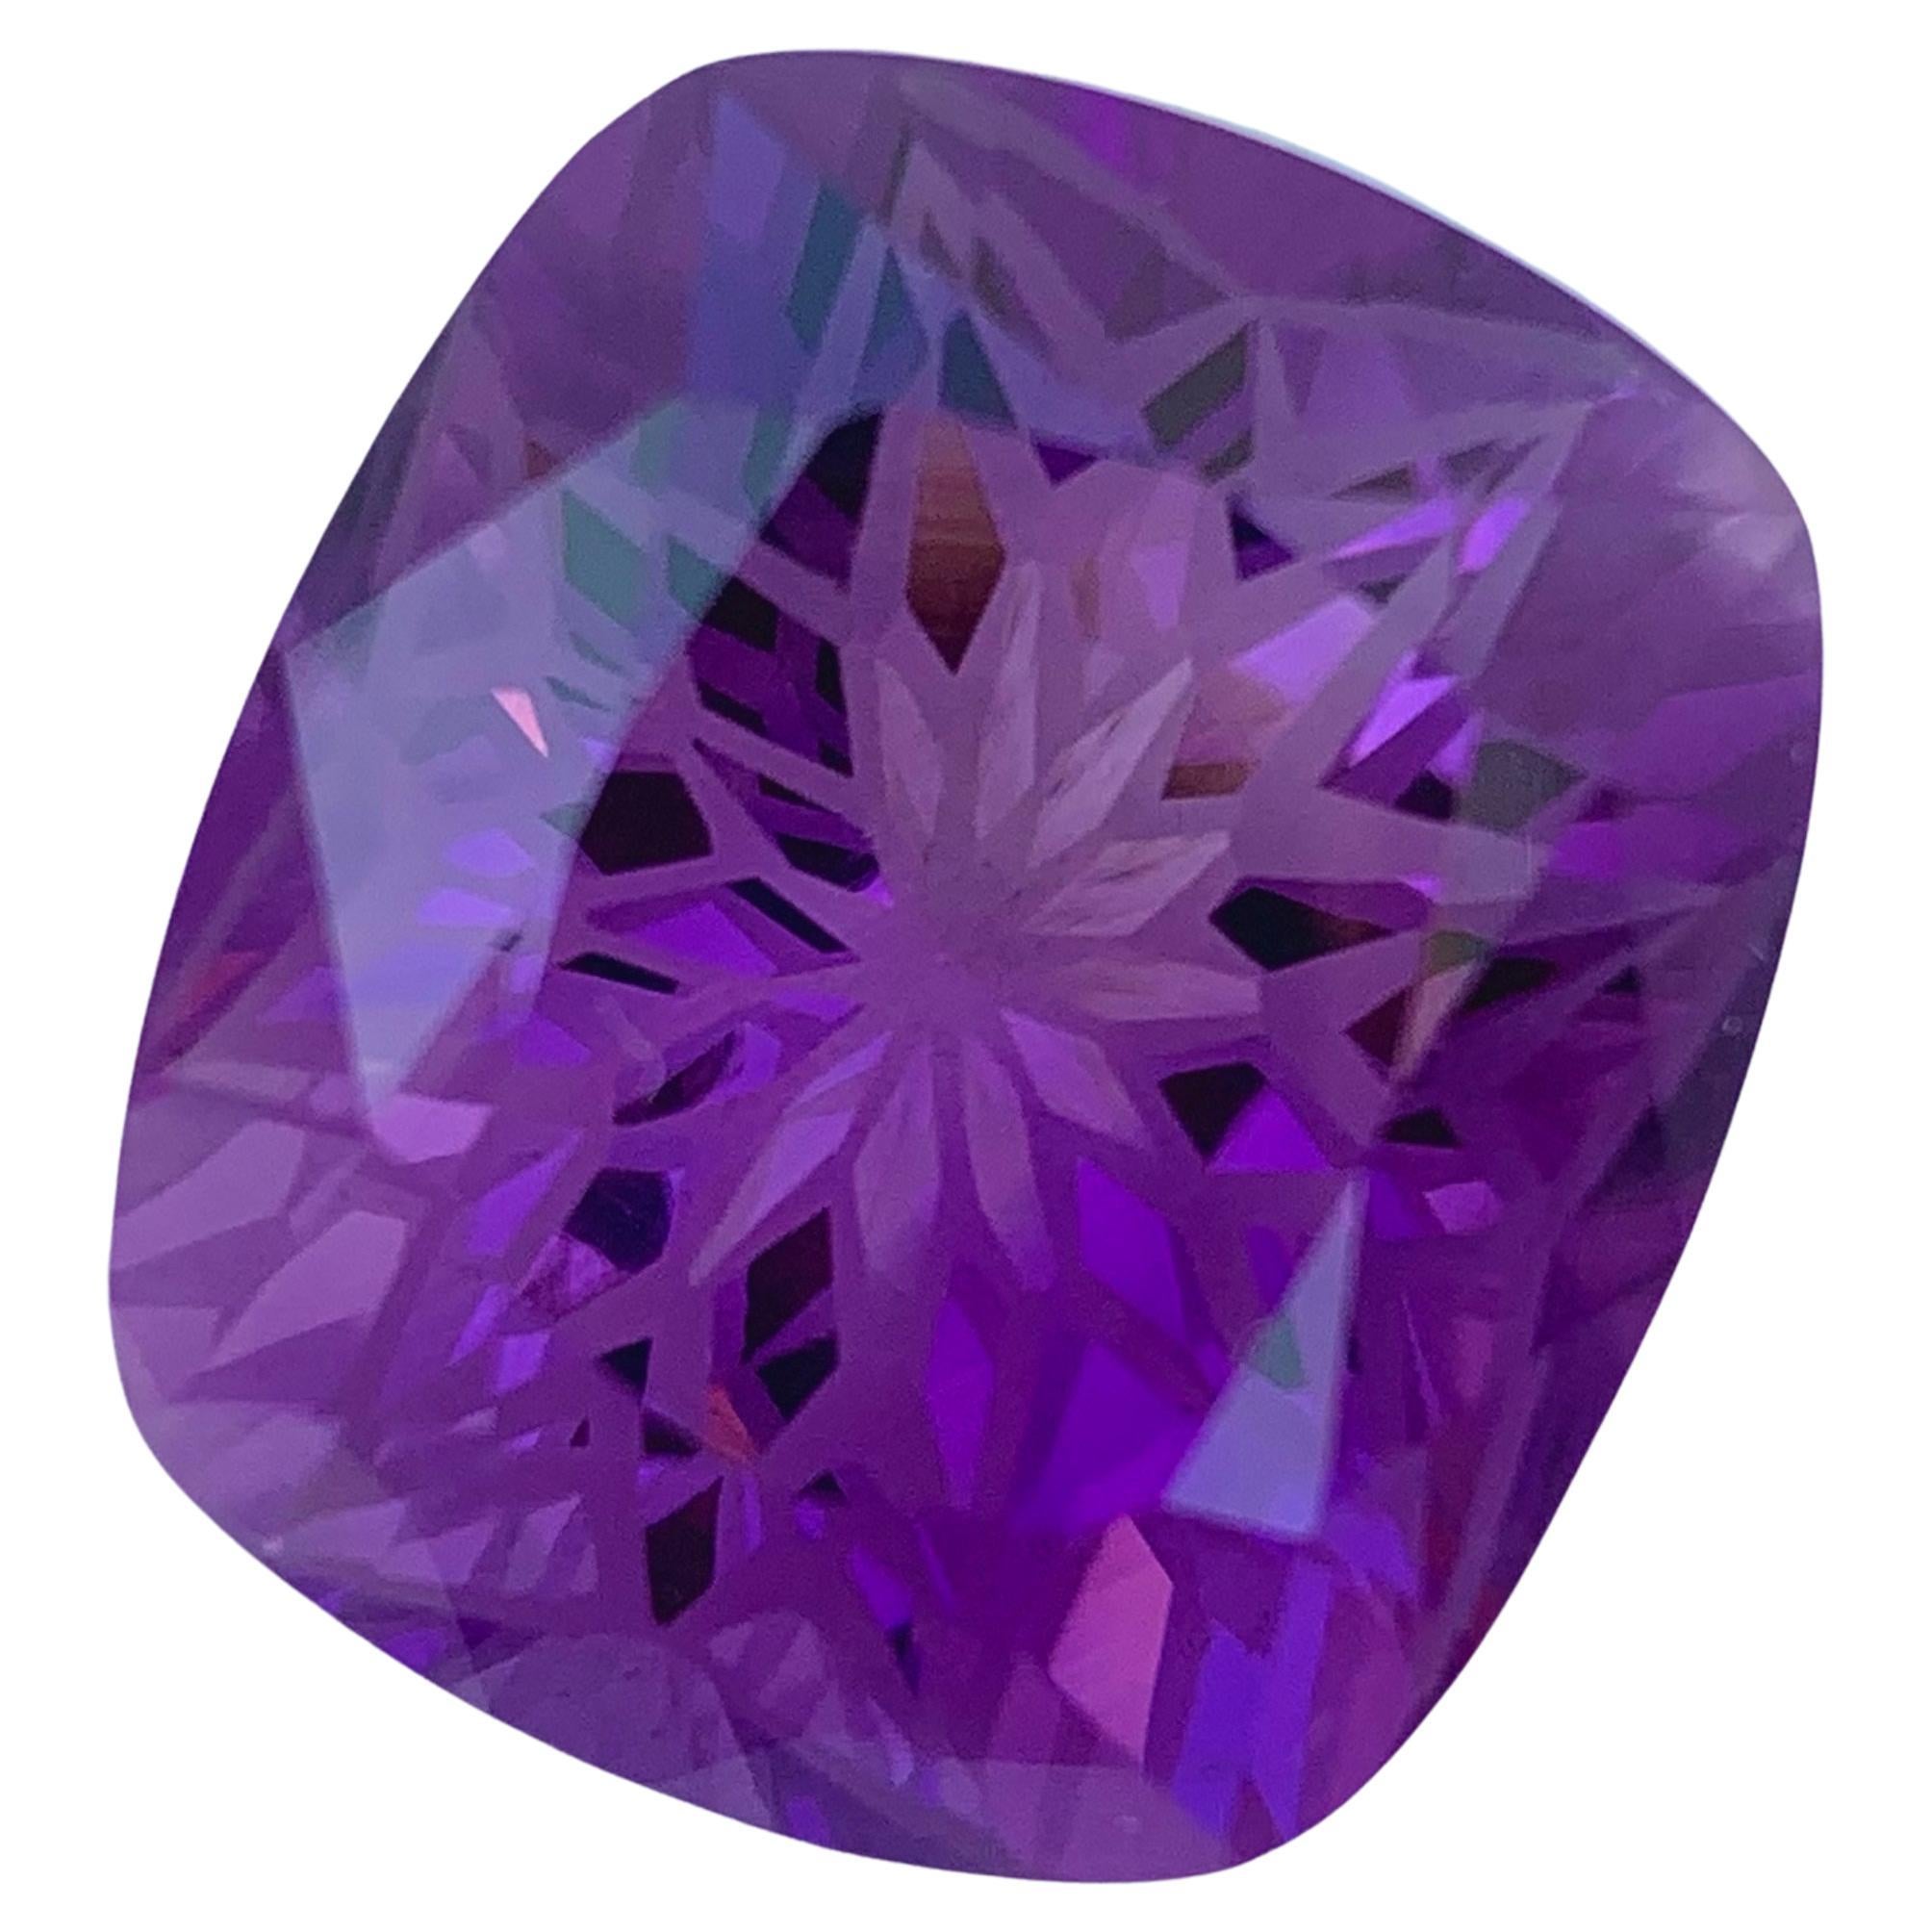 Spectacular Frosted Cut Amethyst Gemstone 29.25 CTS Purple Amethyst High Quality